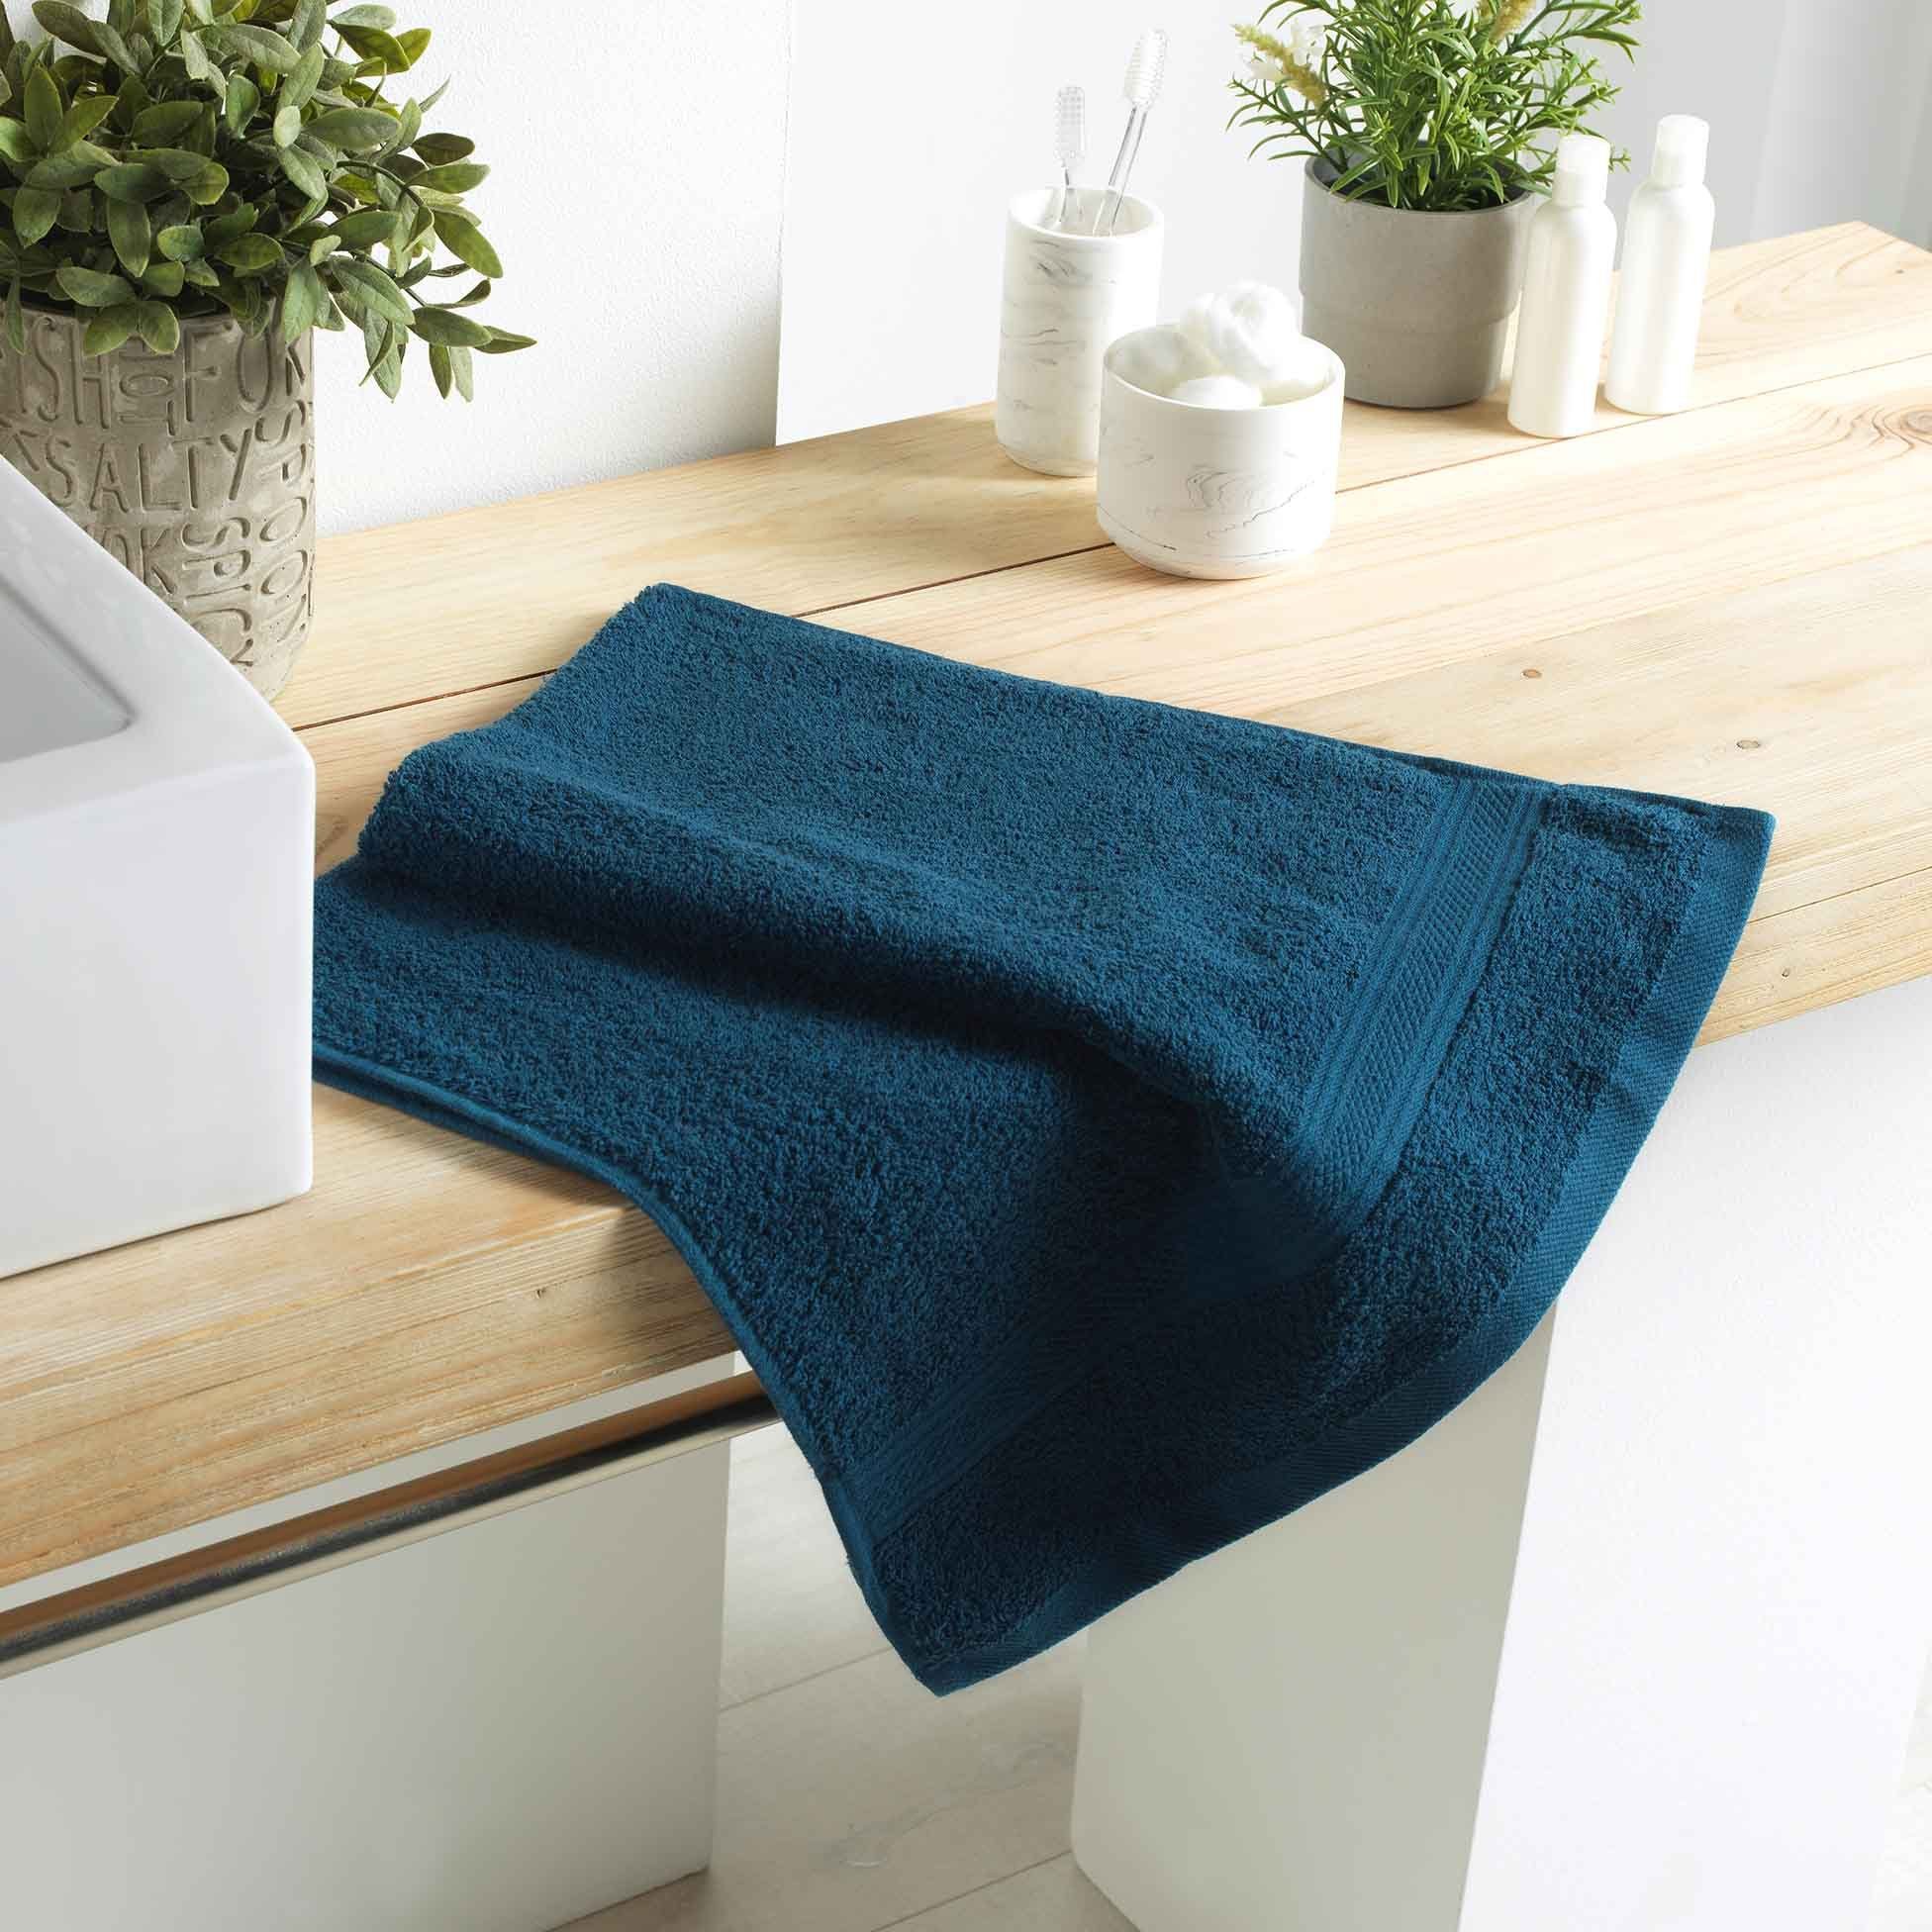 Handtuch Handtücher Frottee Baumwolle Gästehandtuch 100% Handtuch 50x90cm, dynamic24 Blau 50x90cm Handtuch